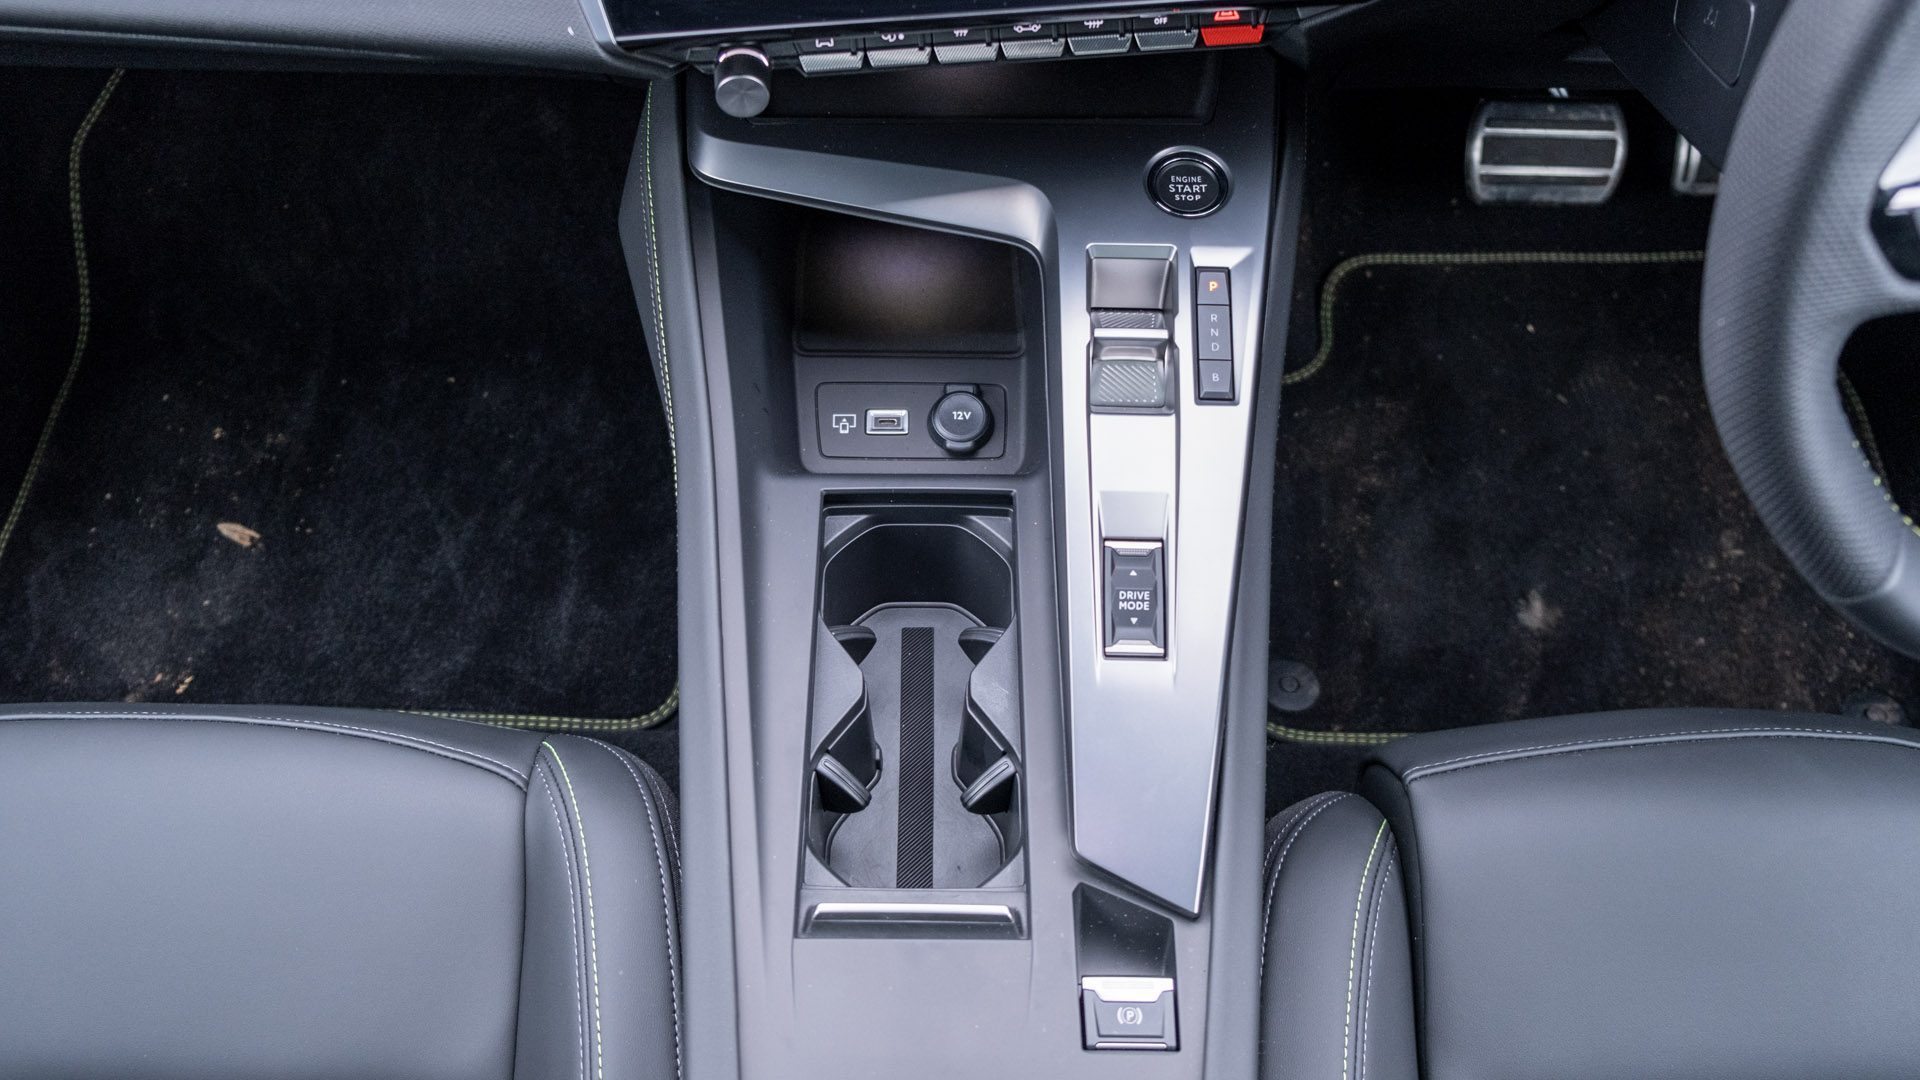 Peugeot e-308 centre console